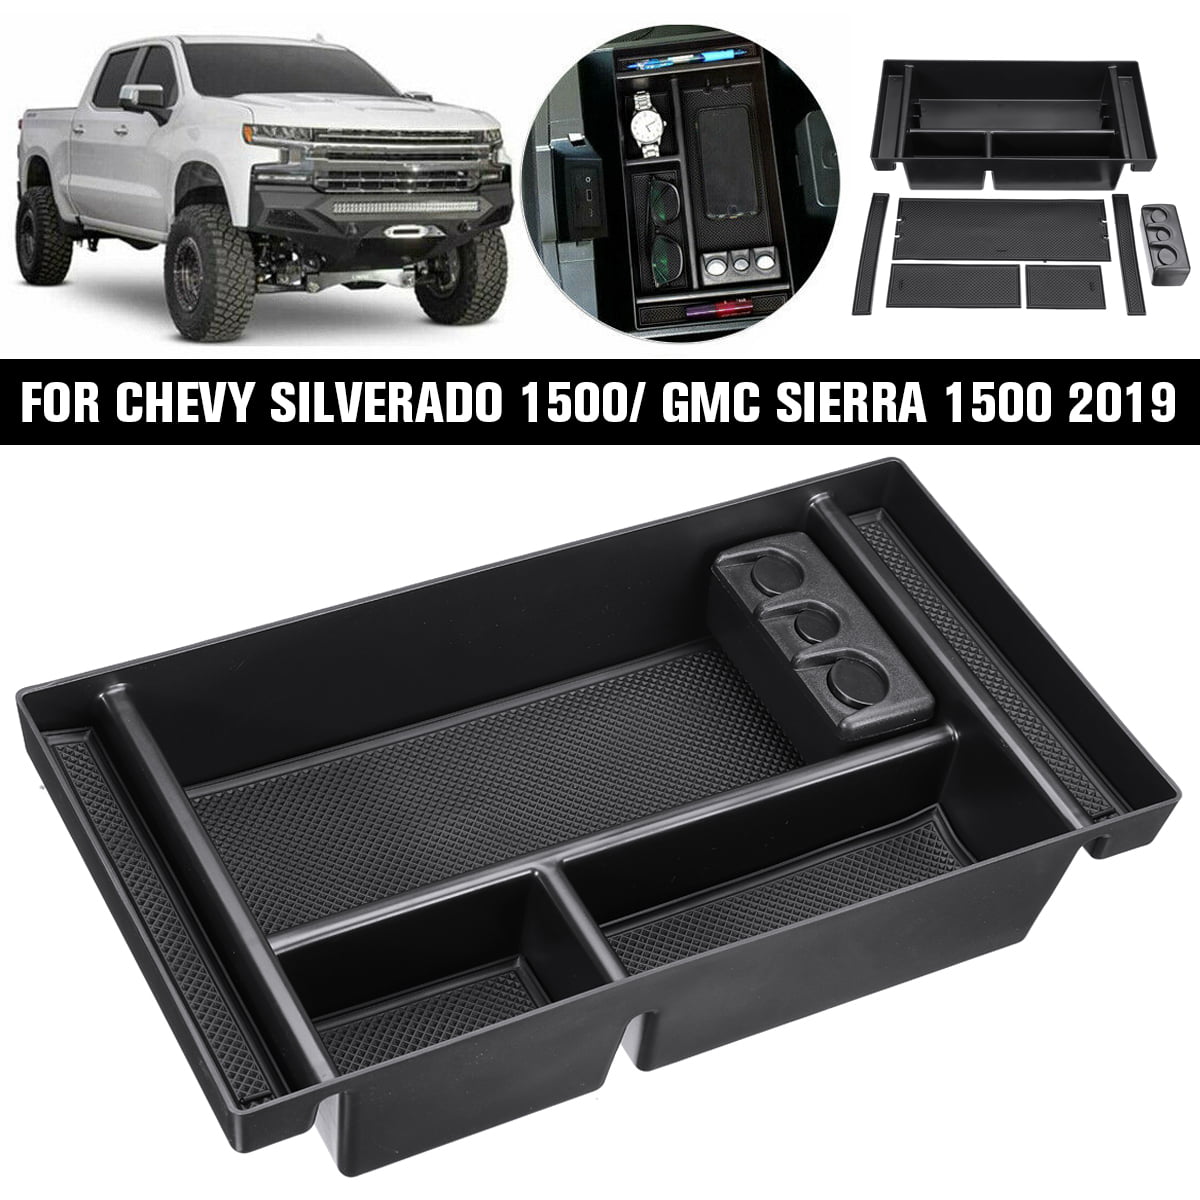 Center Console Organizer for Chevy Silverado 1500/GMC Sierra 1500 - Made in USA 2014-18 Vehicle OCD 2015-19 Silverado HD/Sierra HD Full Console w/Bucket Seats ONLY